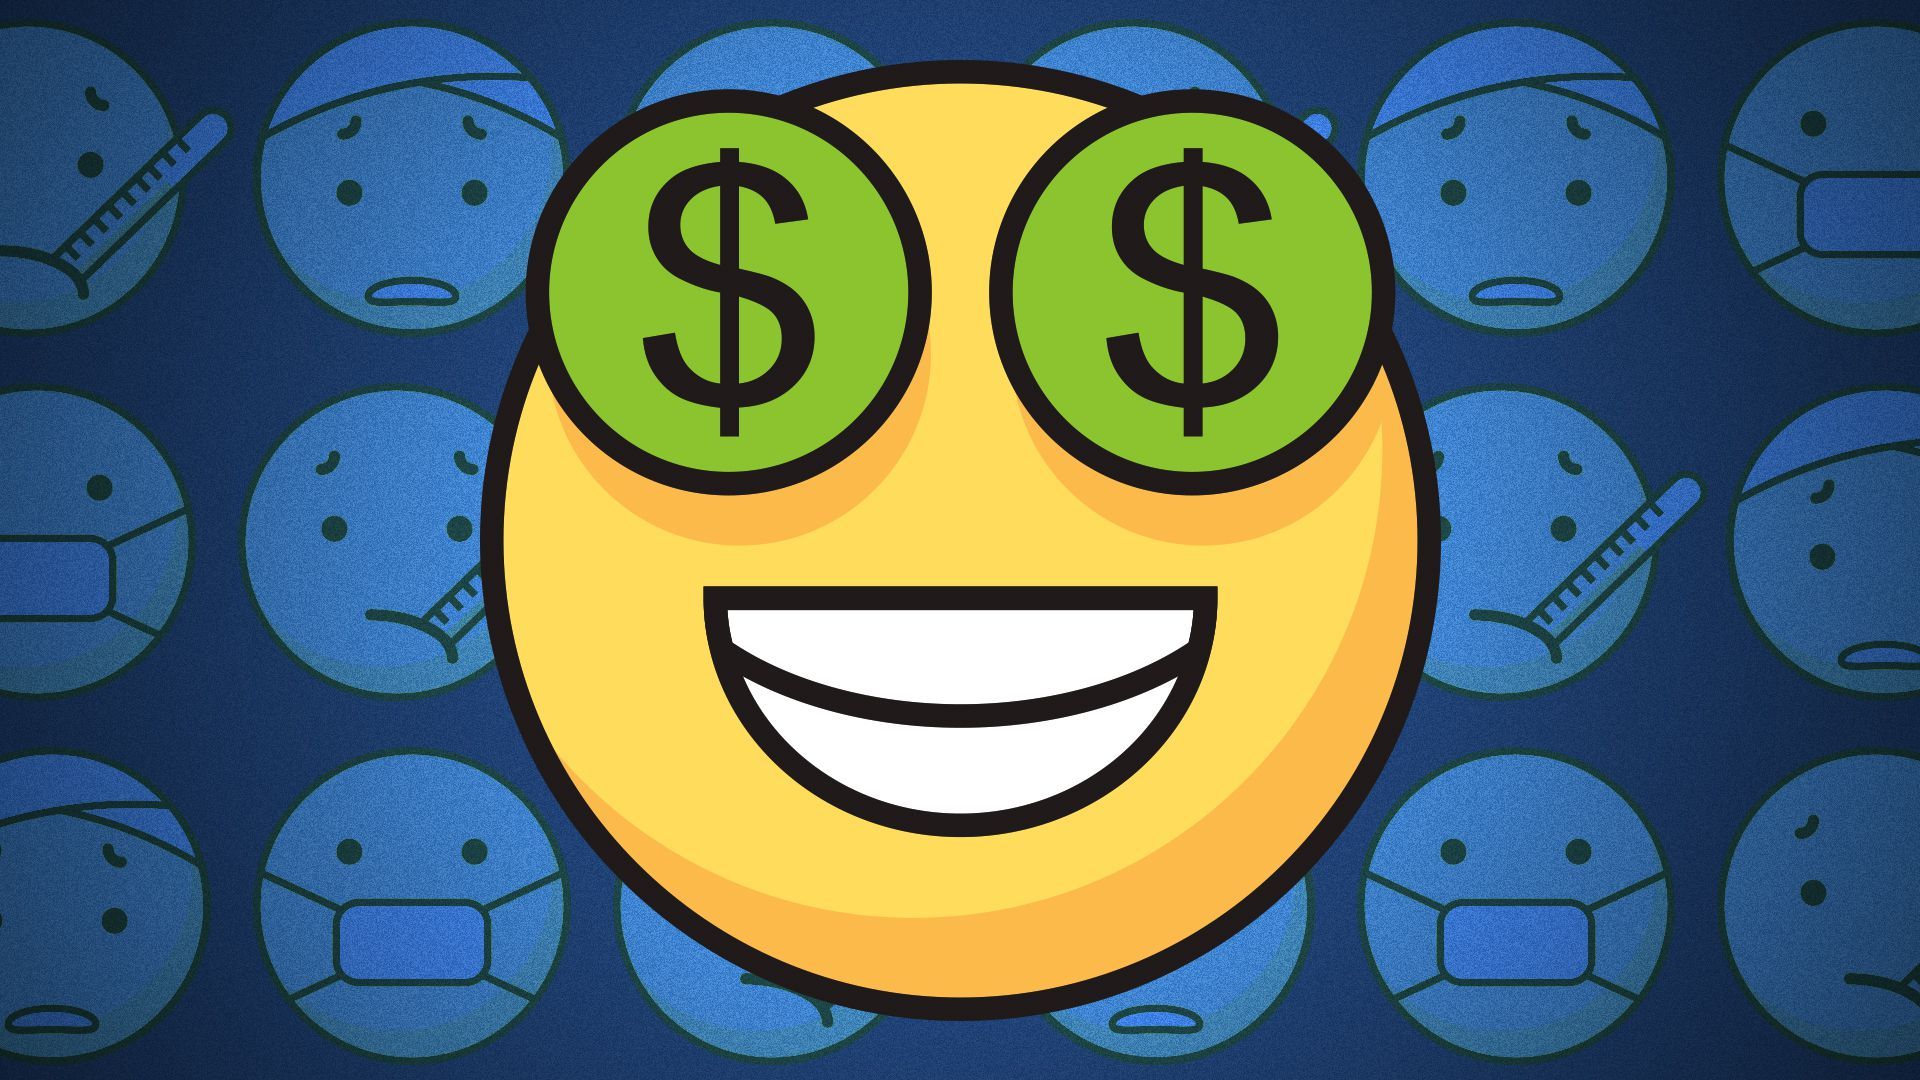 Illustration of emoji with money symbols for eyes surrounded by sick emoji.